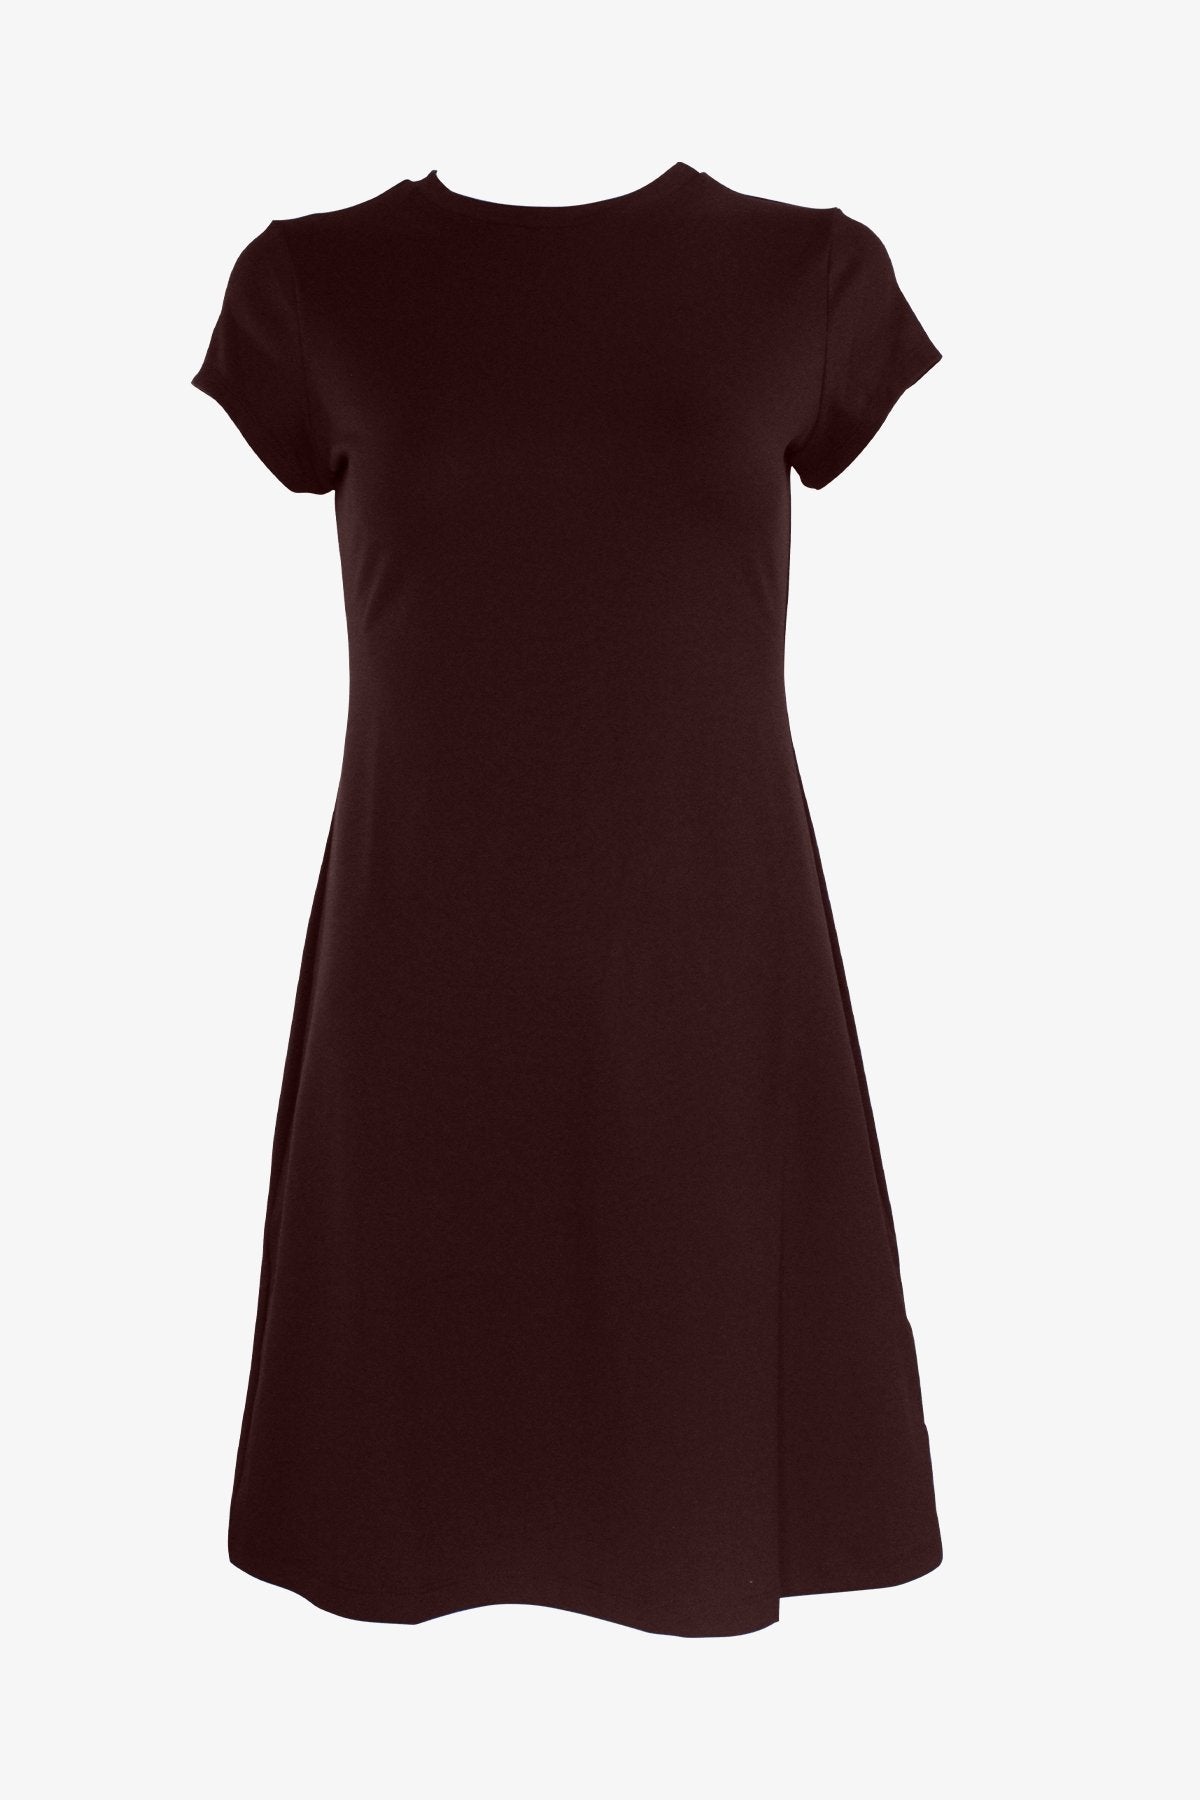 Short Sleeve A-Line Dress in Mahogany - shop-olivia.com